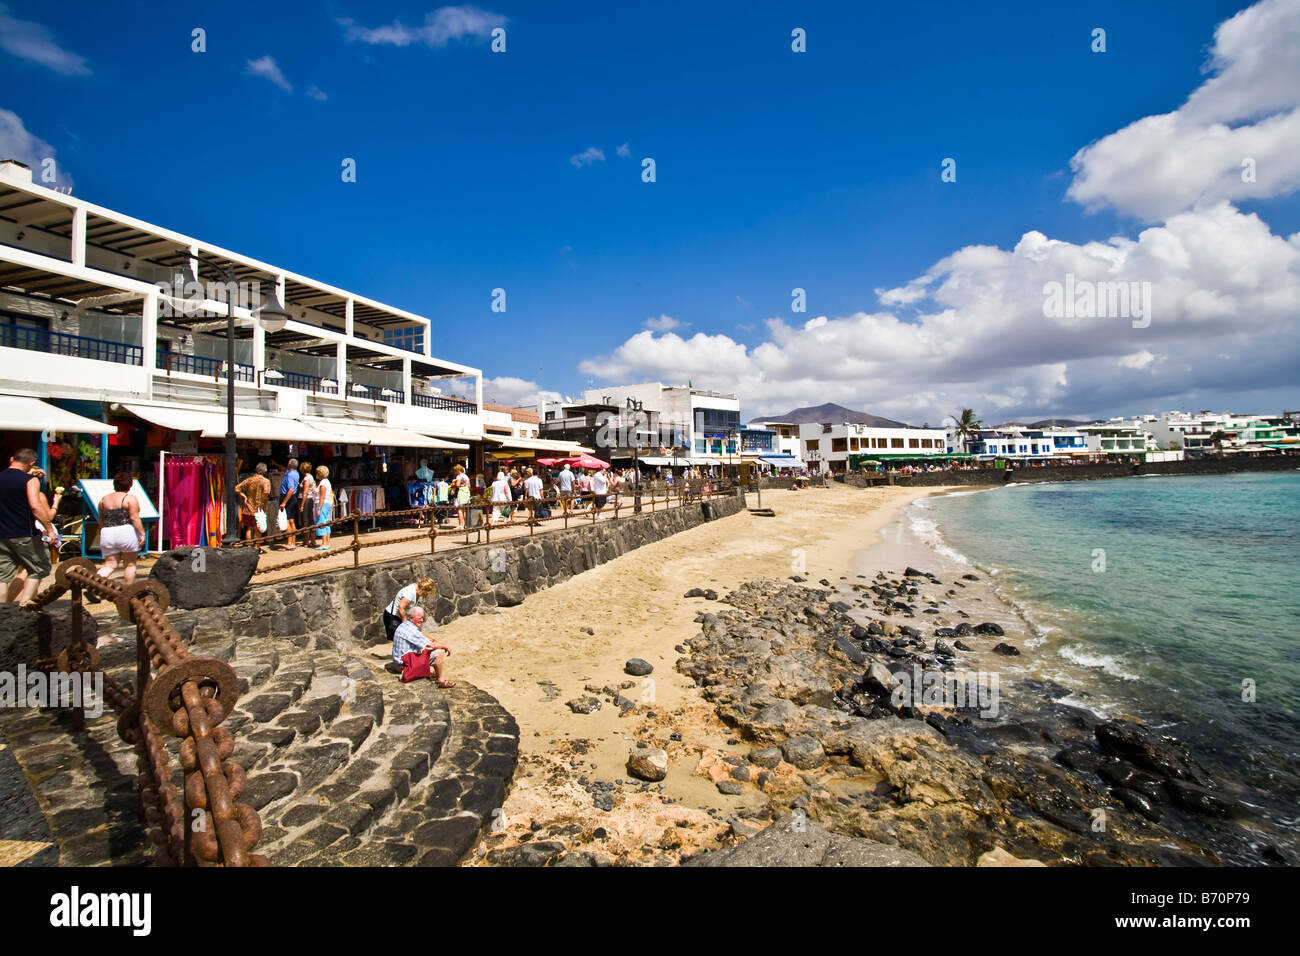 Playa Blanca Promenade walk beach restaurant shops Lanzarote Canary Islands Canaries Spain Europe Travel tourism Stock Photo